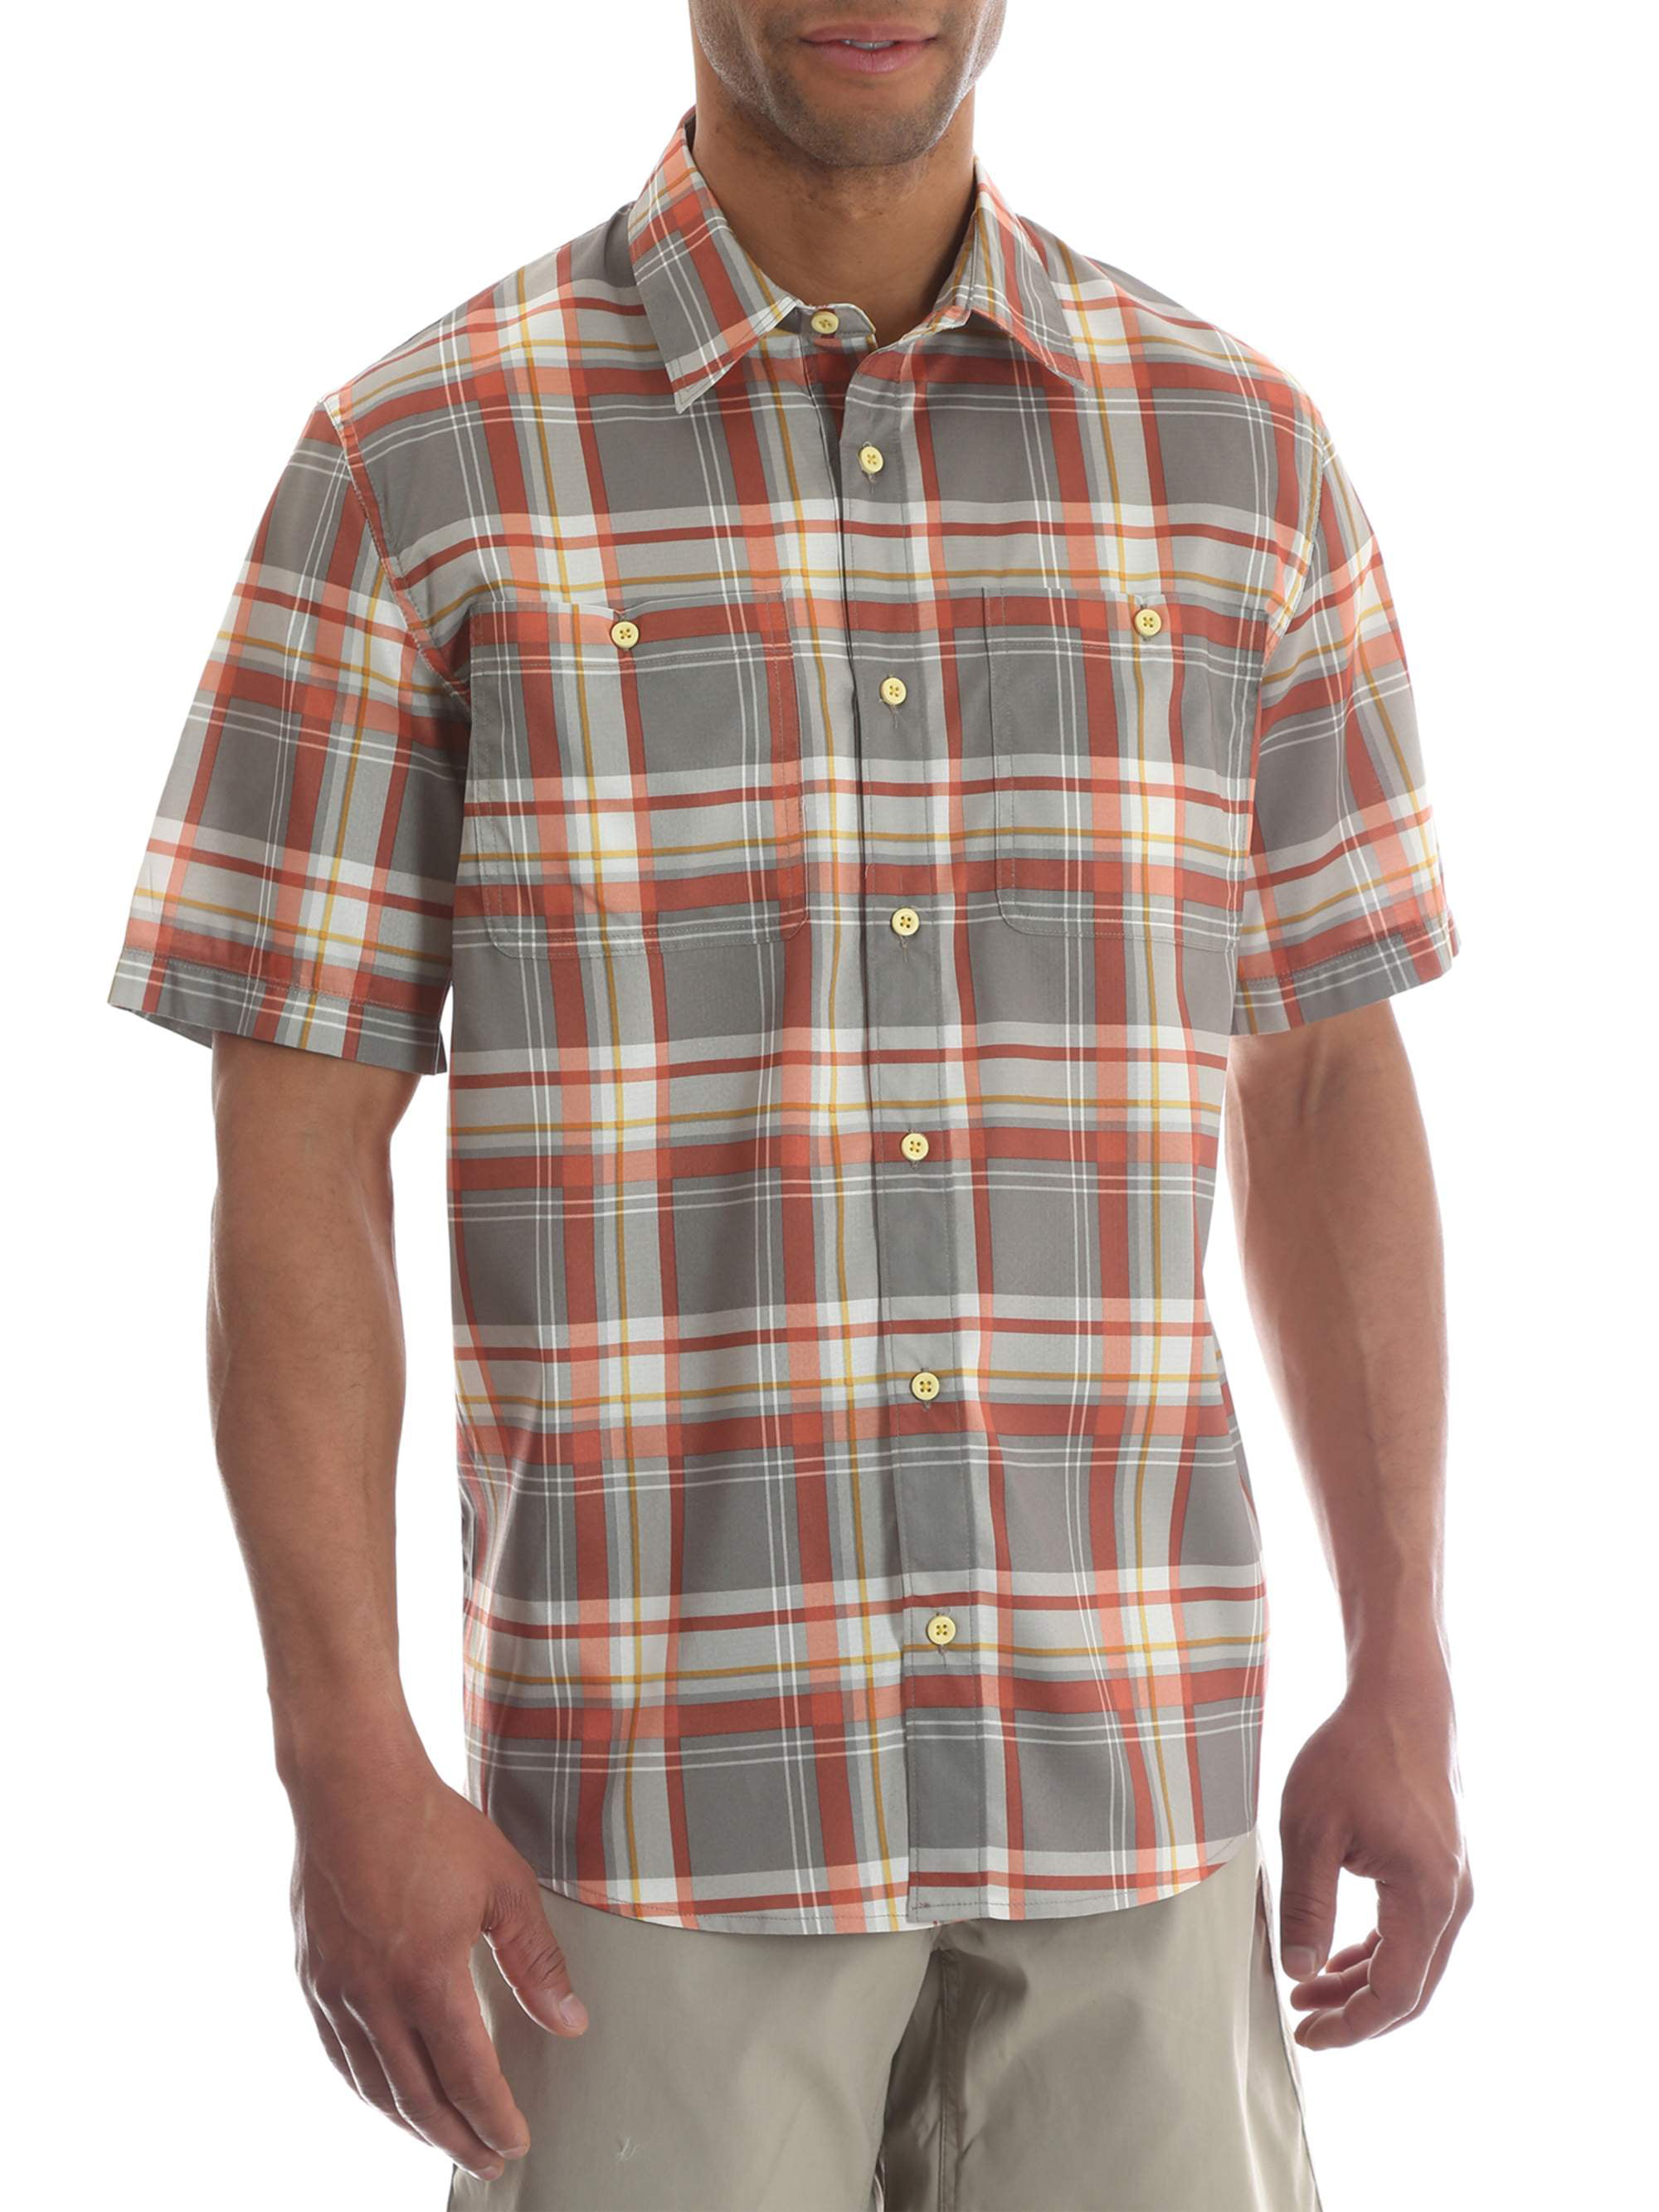 Men s Short Sleeve Utility Shirt Walmart com